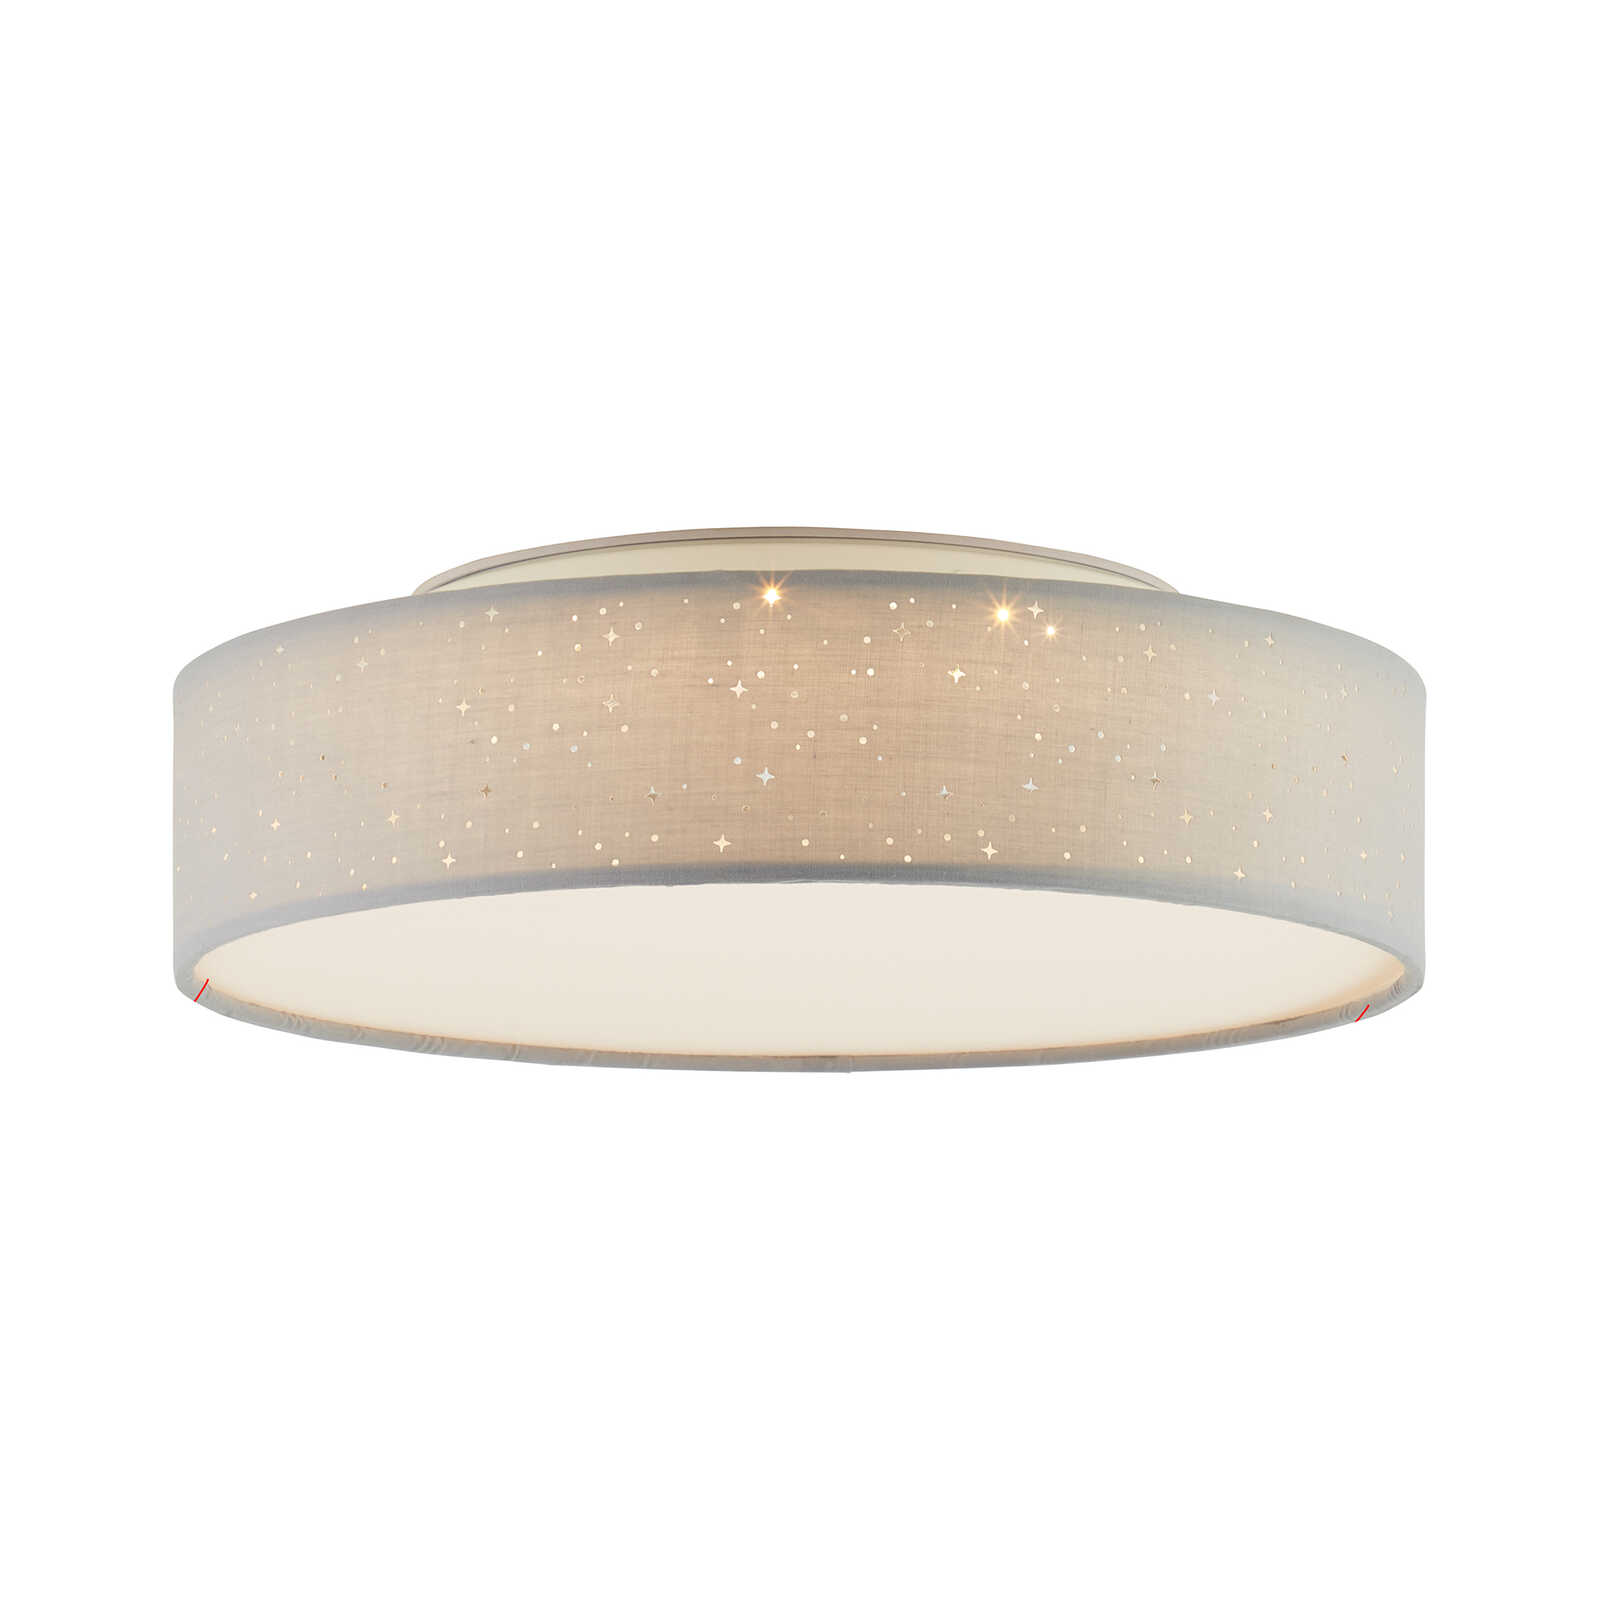 Textile ceiling light - Ava 1 - Grey
